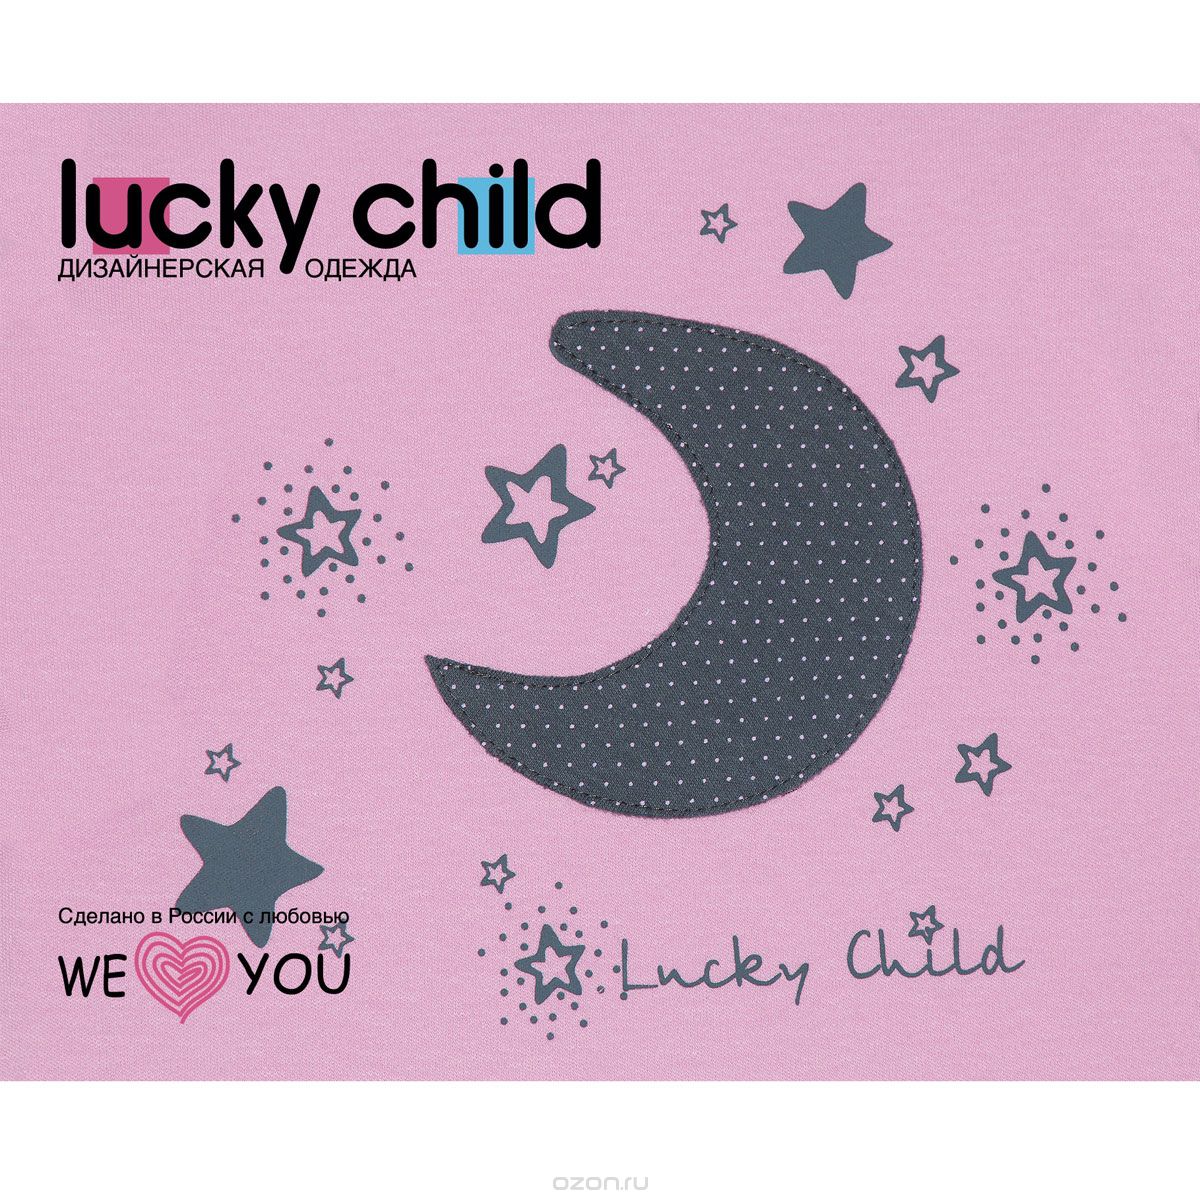    Lucky Child: , , : -, . 12-411.  86/92